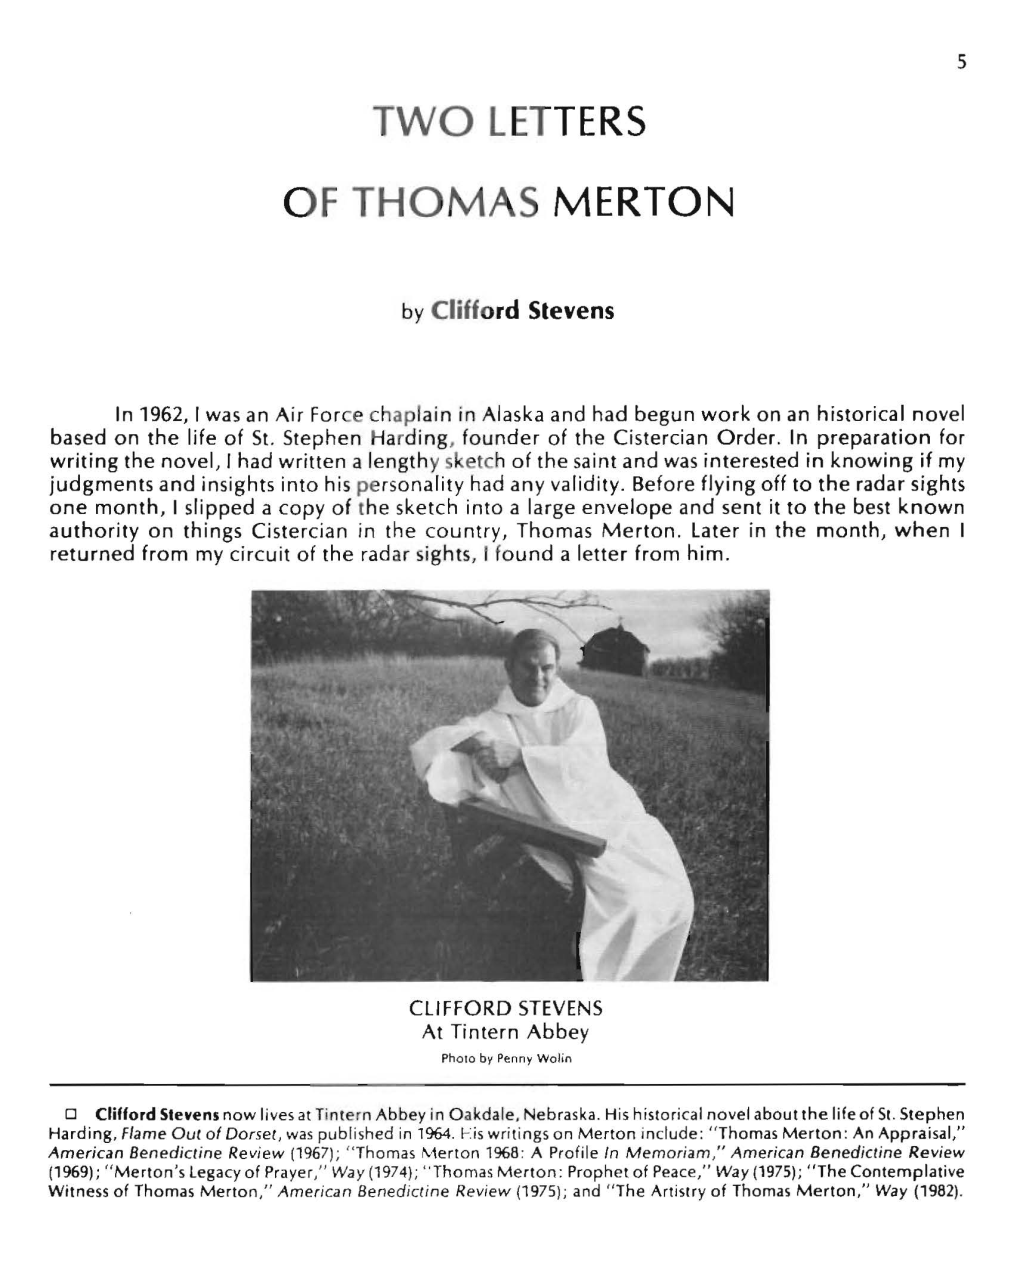 Two Letters of Thomas Merton